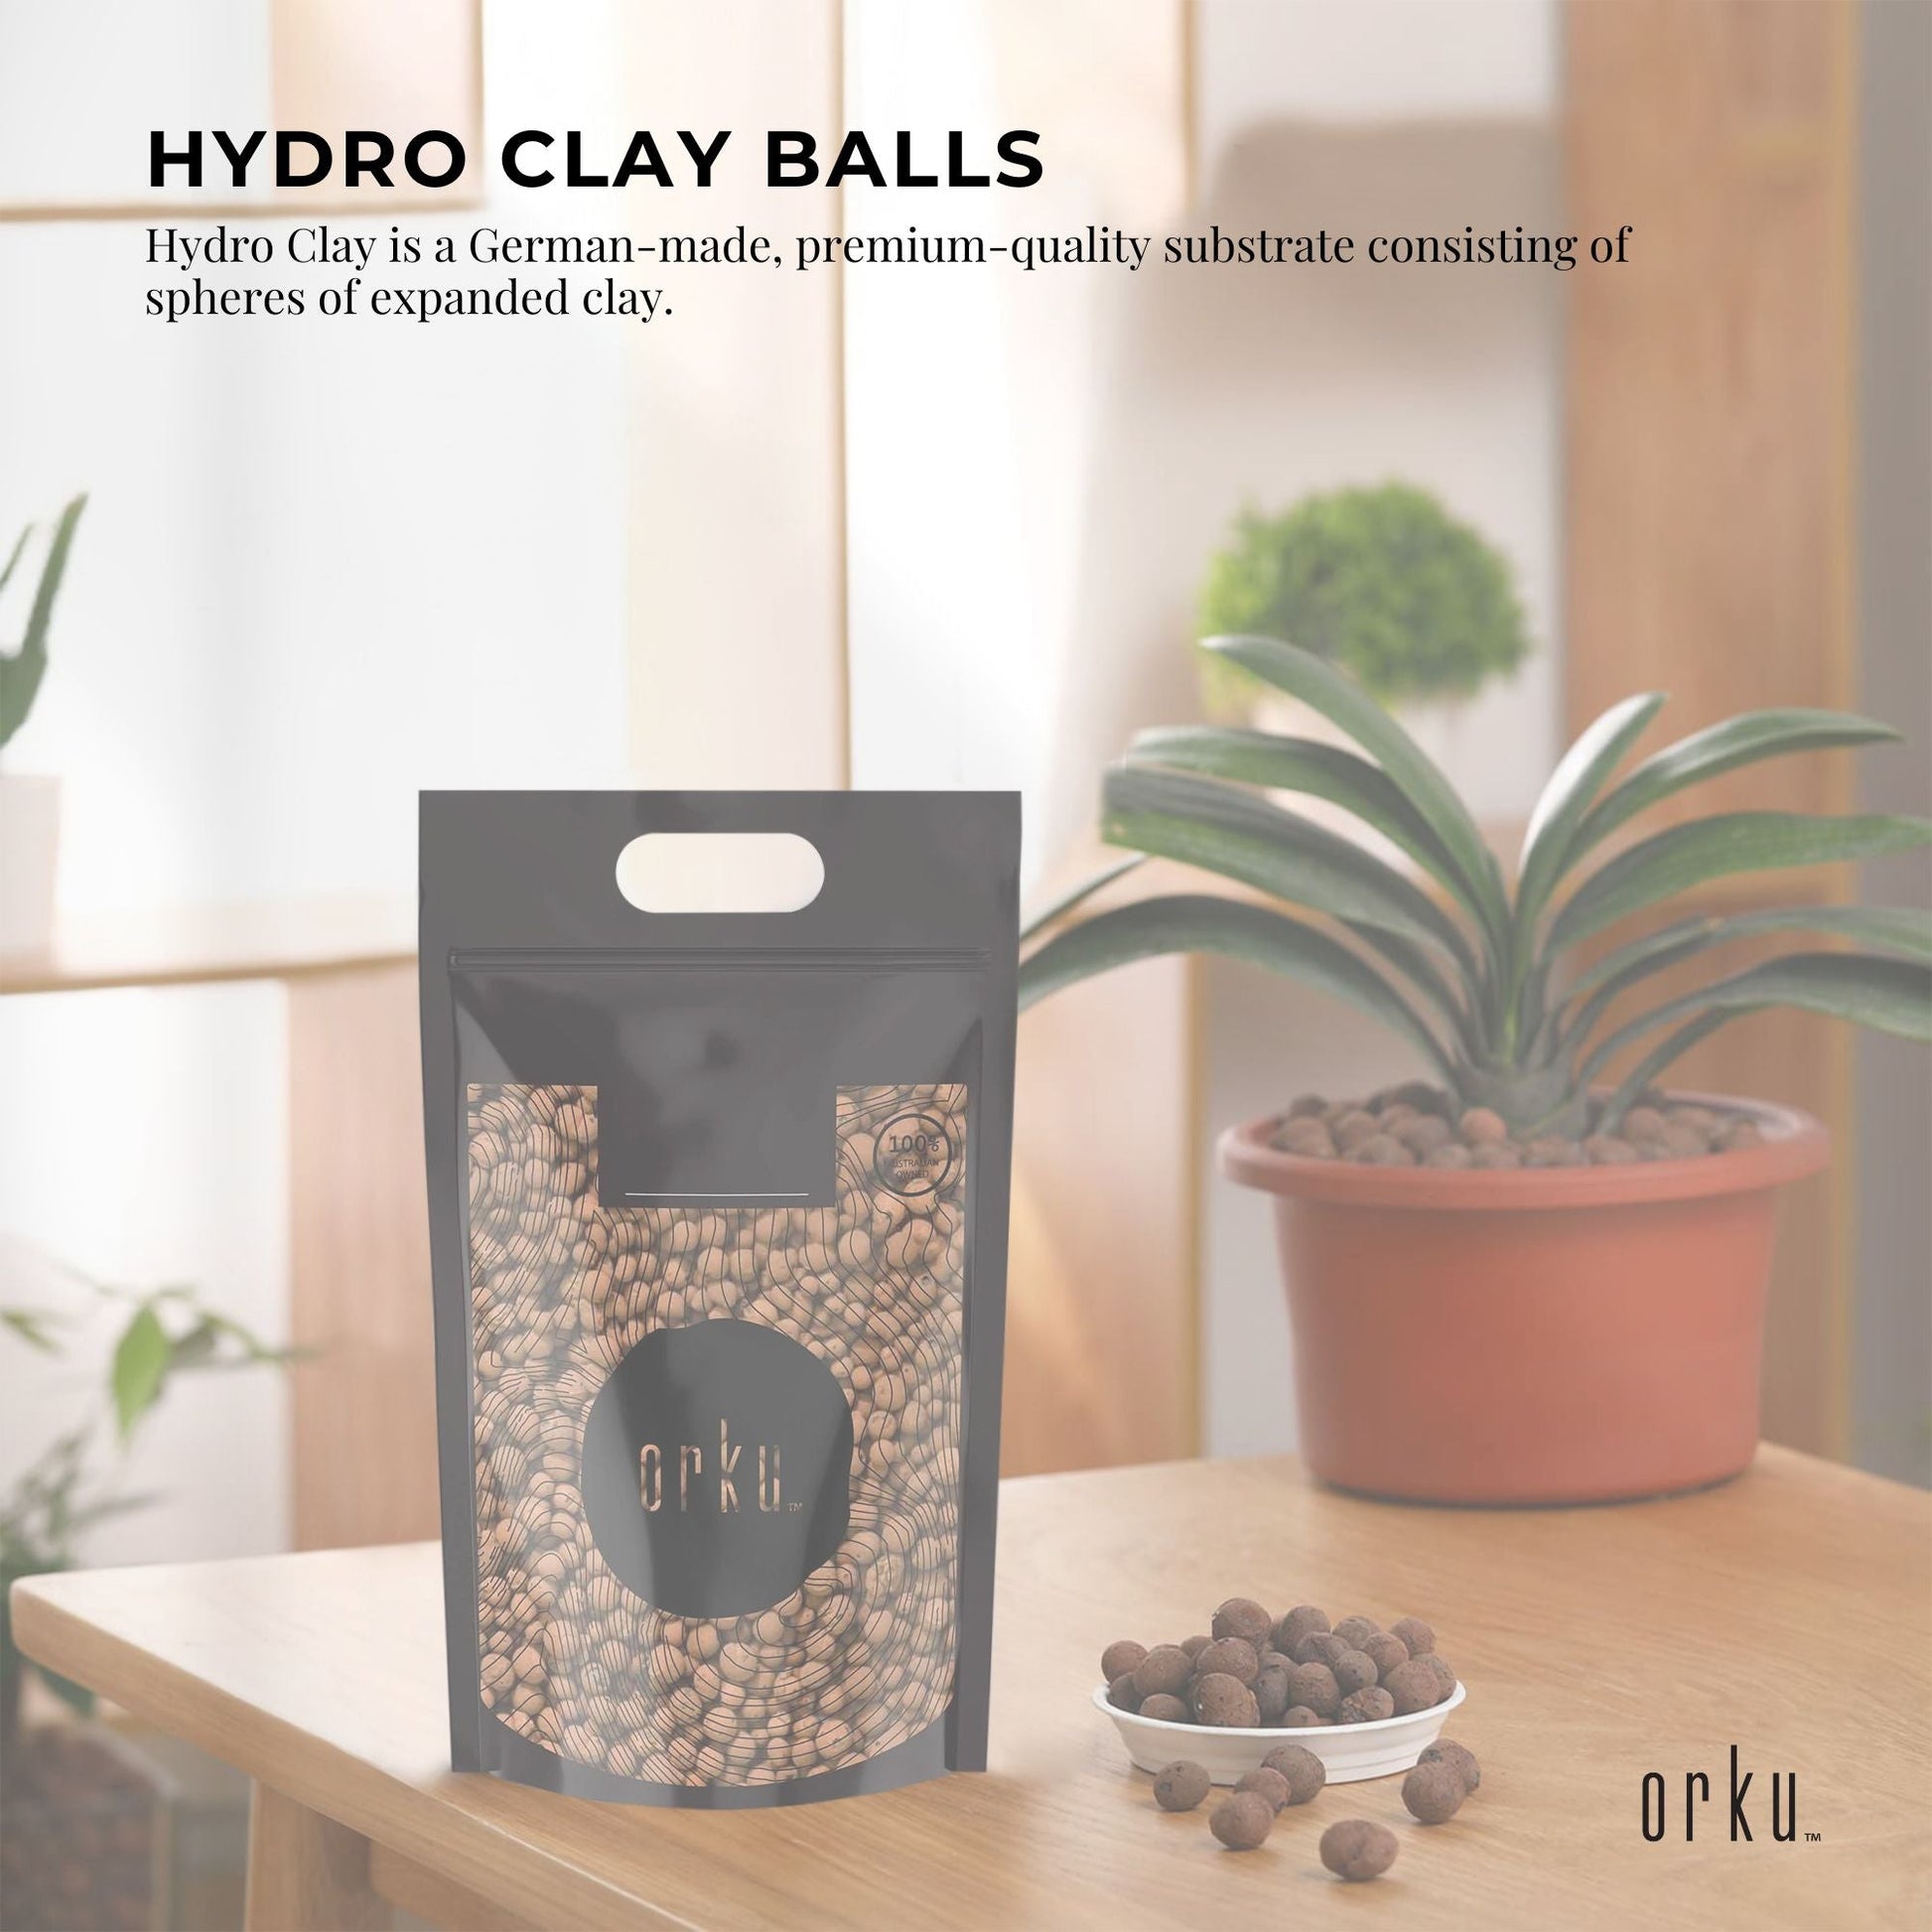 Organic Hydro Clay Balls - Premium Hydroponic Expanded Plant Growing Medium Bulk